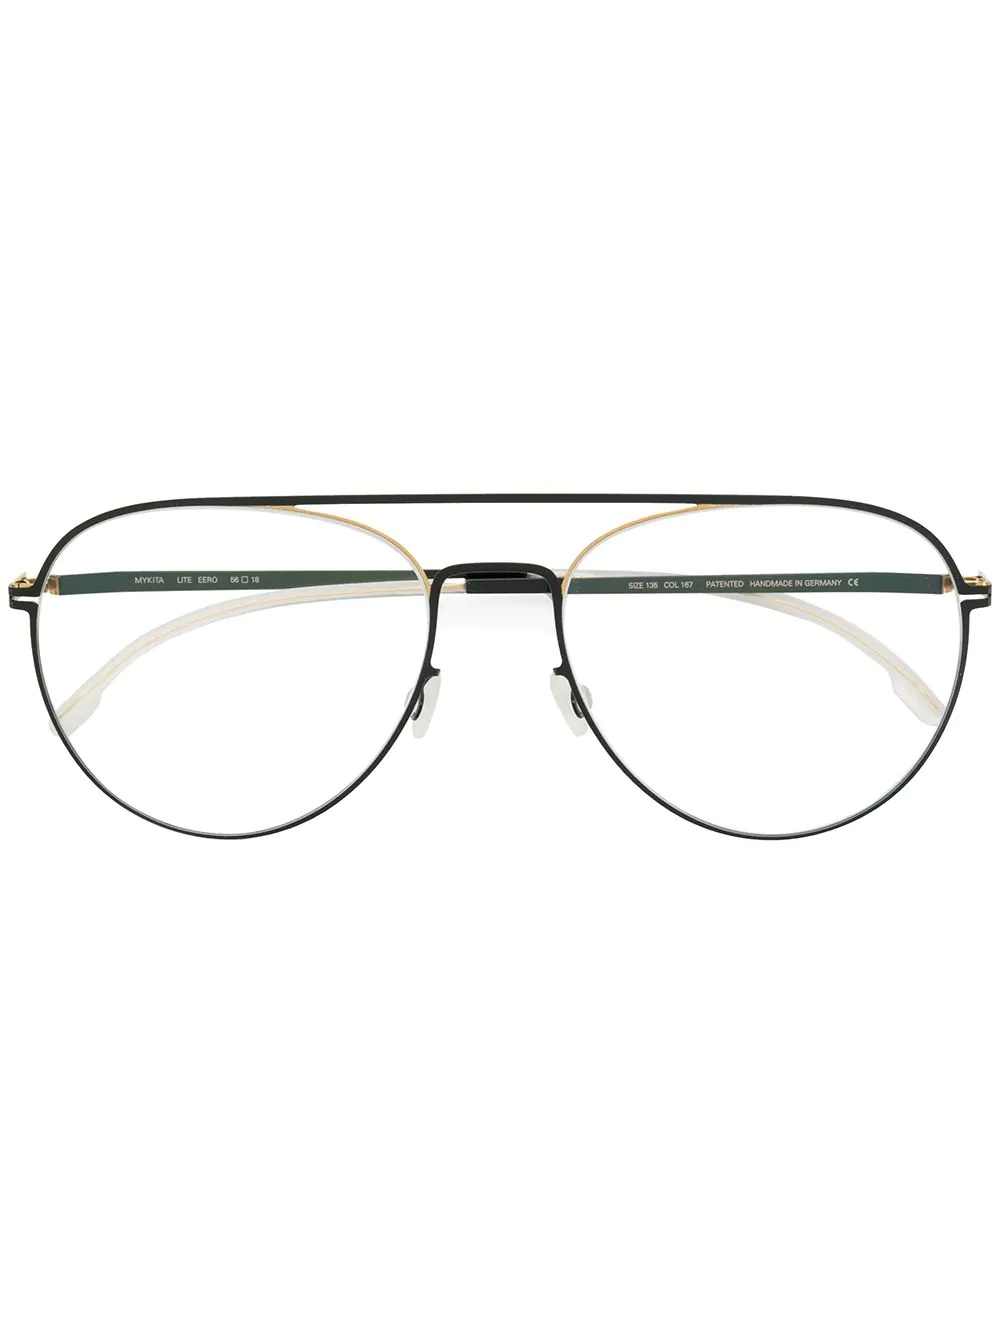 aviator-style glasses - 1